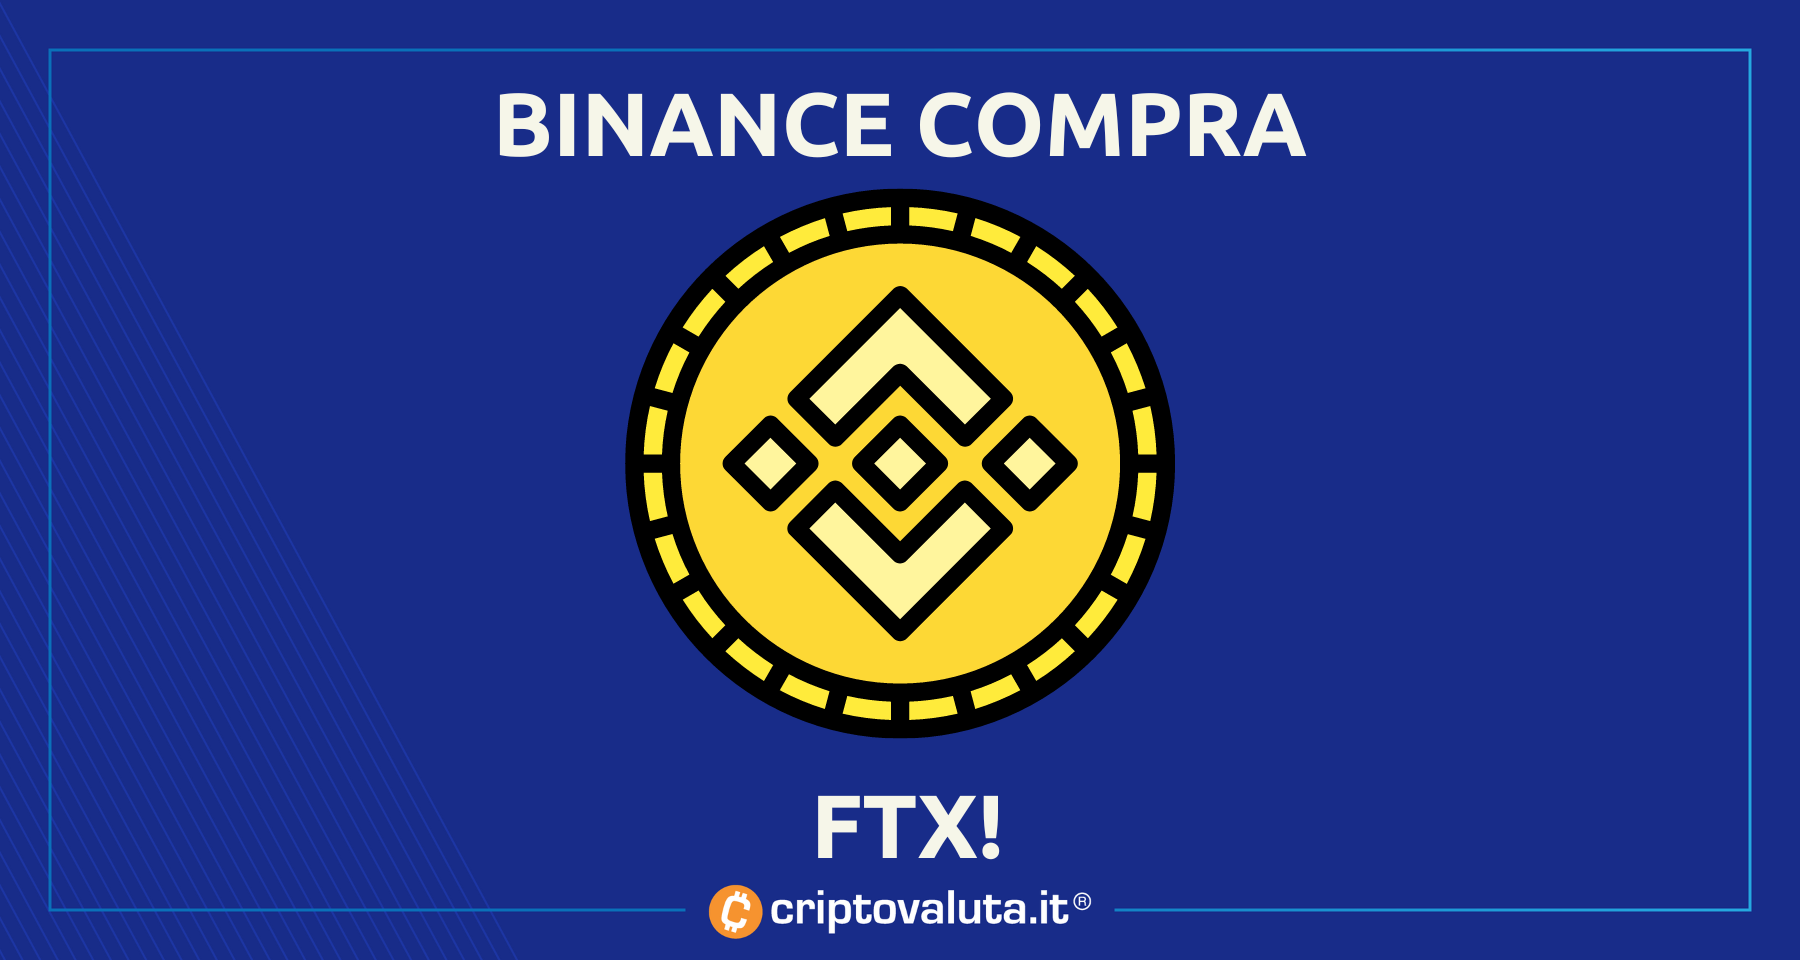 Binance compra FTX | Bitcoin e cripto VOLANO!